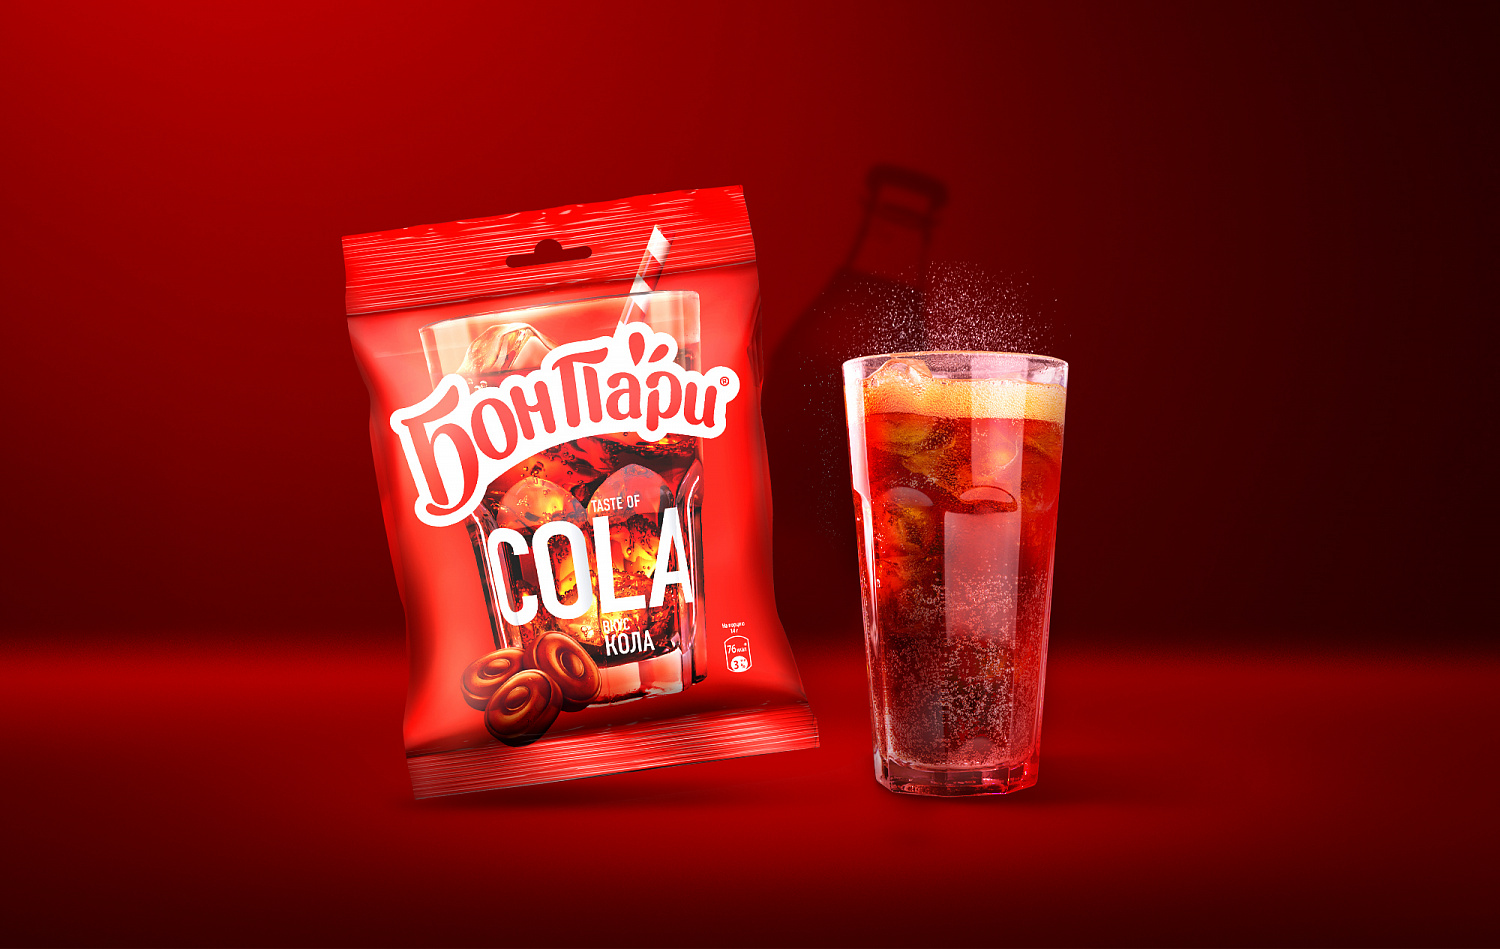 Бон Пари® taste of Cola: дизайн упаковки леденцовой карамели - Портфолио Depot